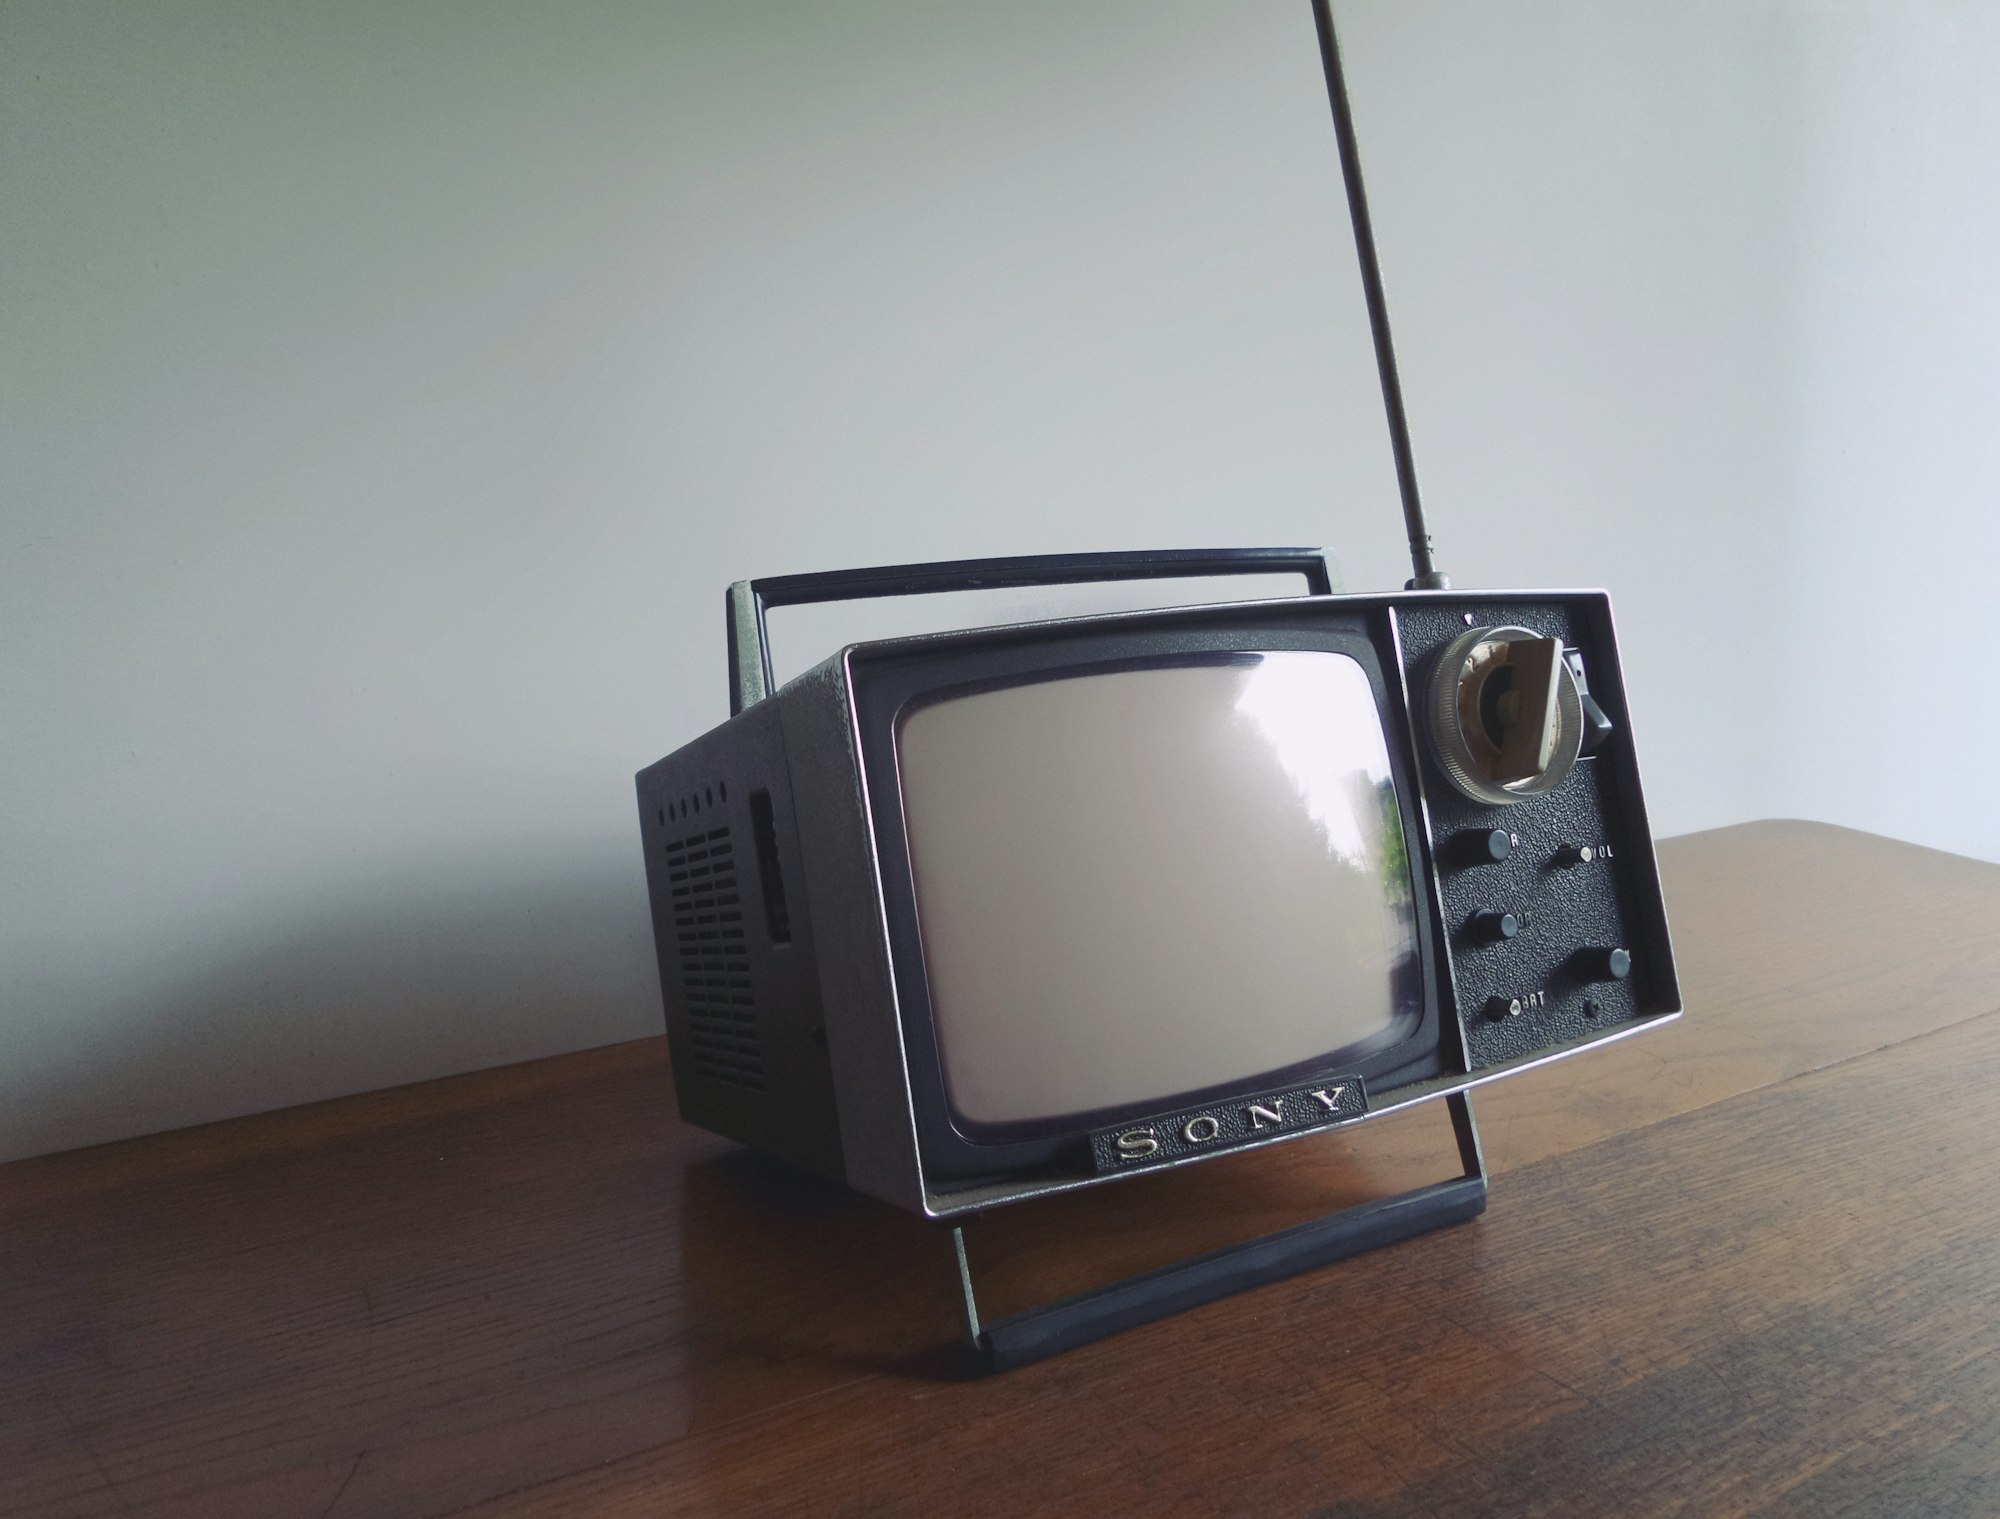 Aereo - The Future of Television?